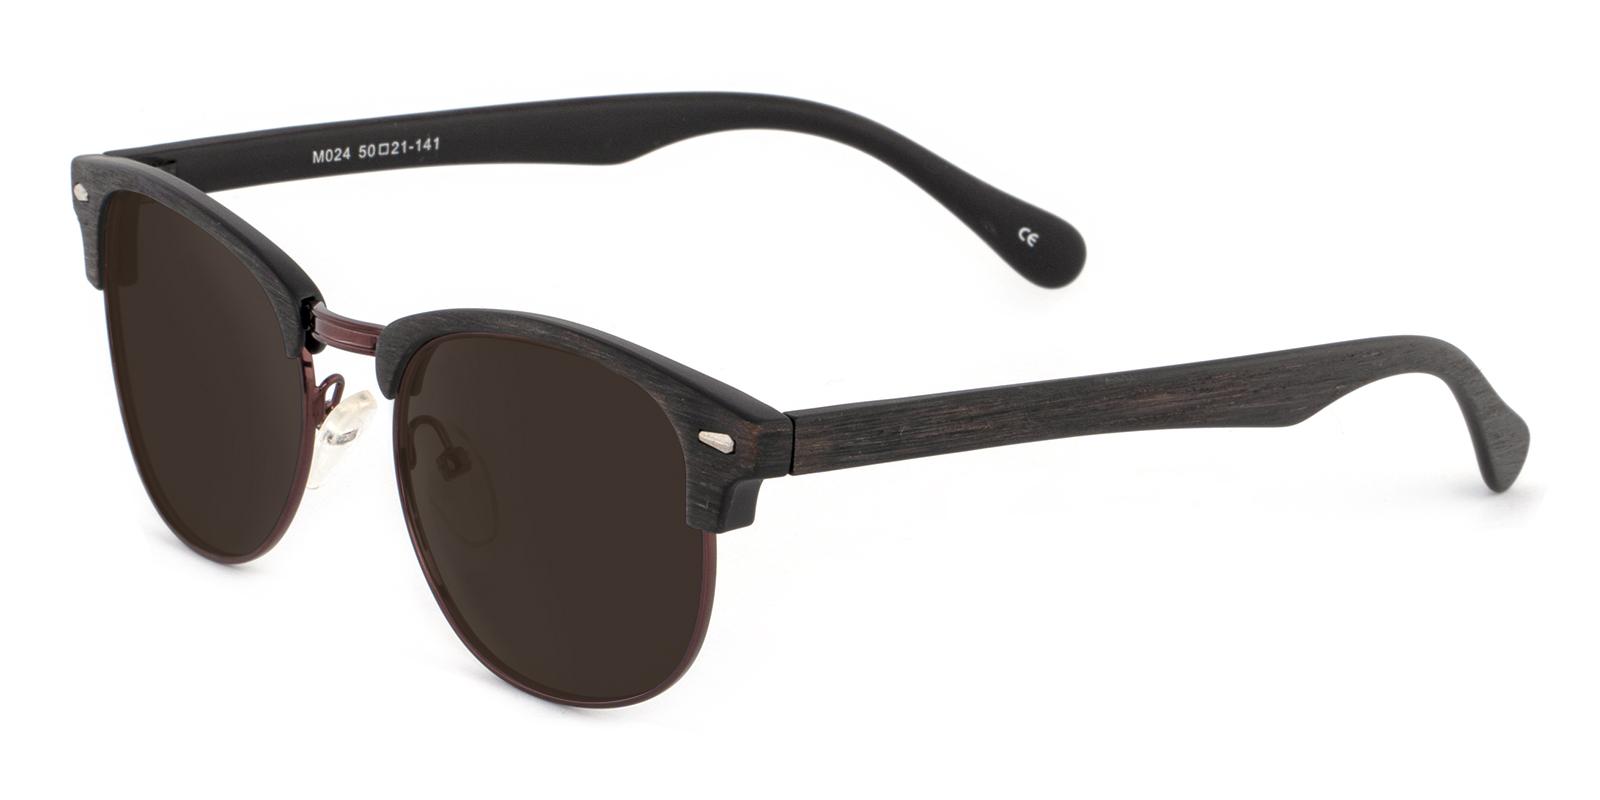 Michel Gun Combination NosePads , Sunglasses Frames from ABBE Glasses